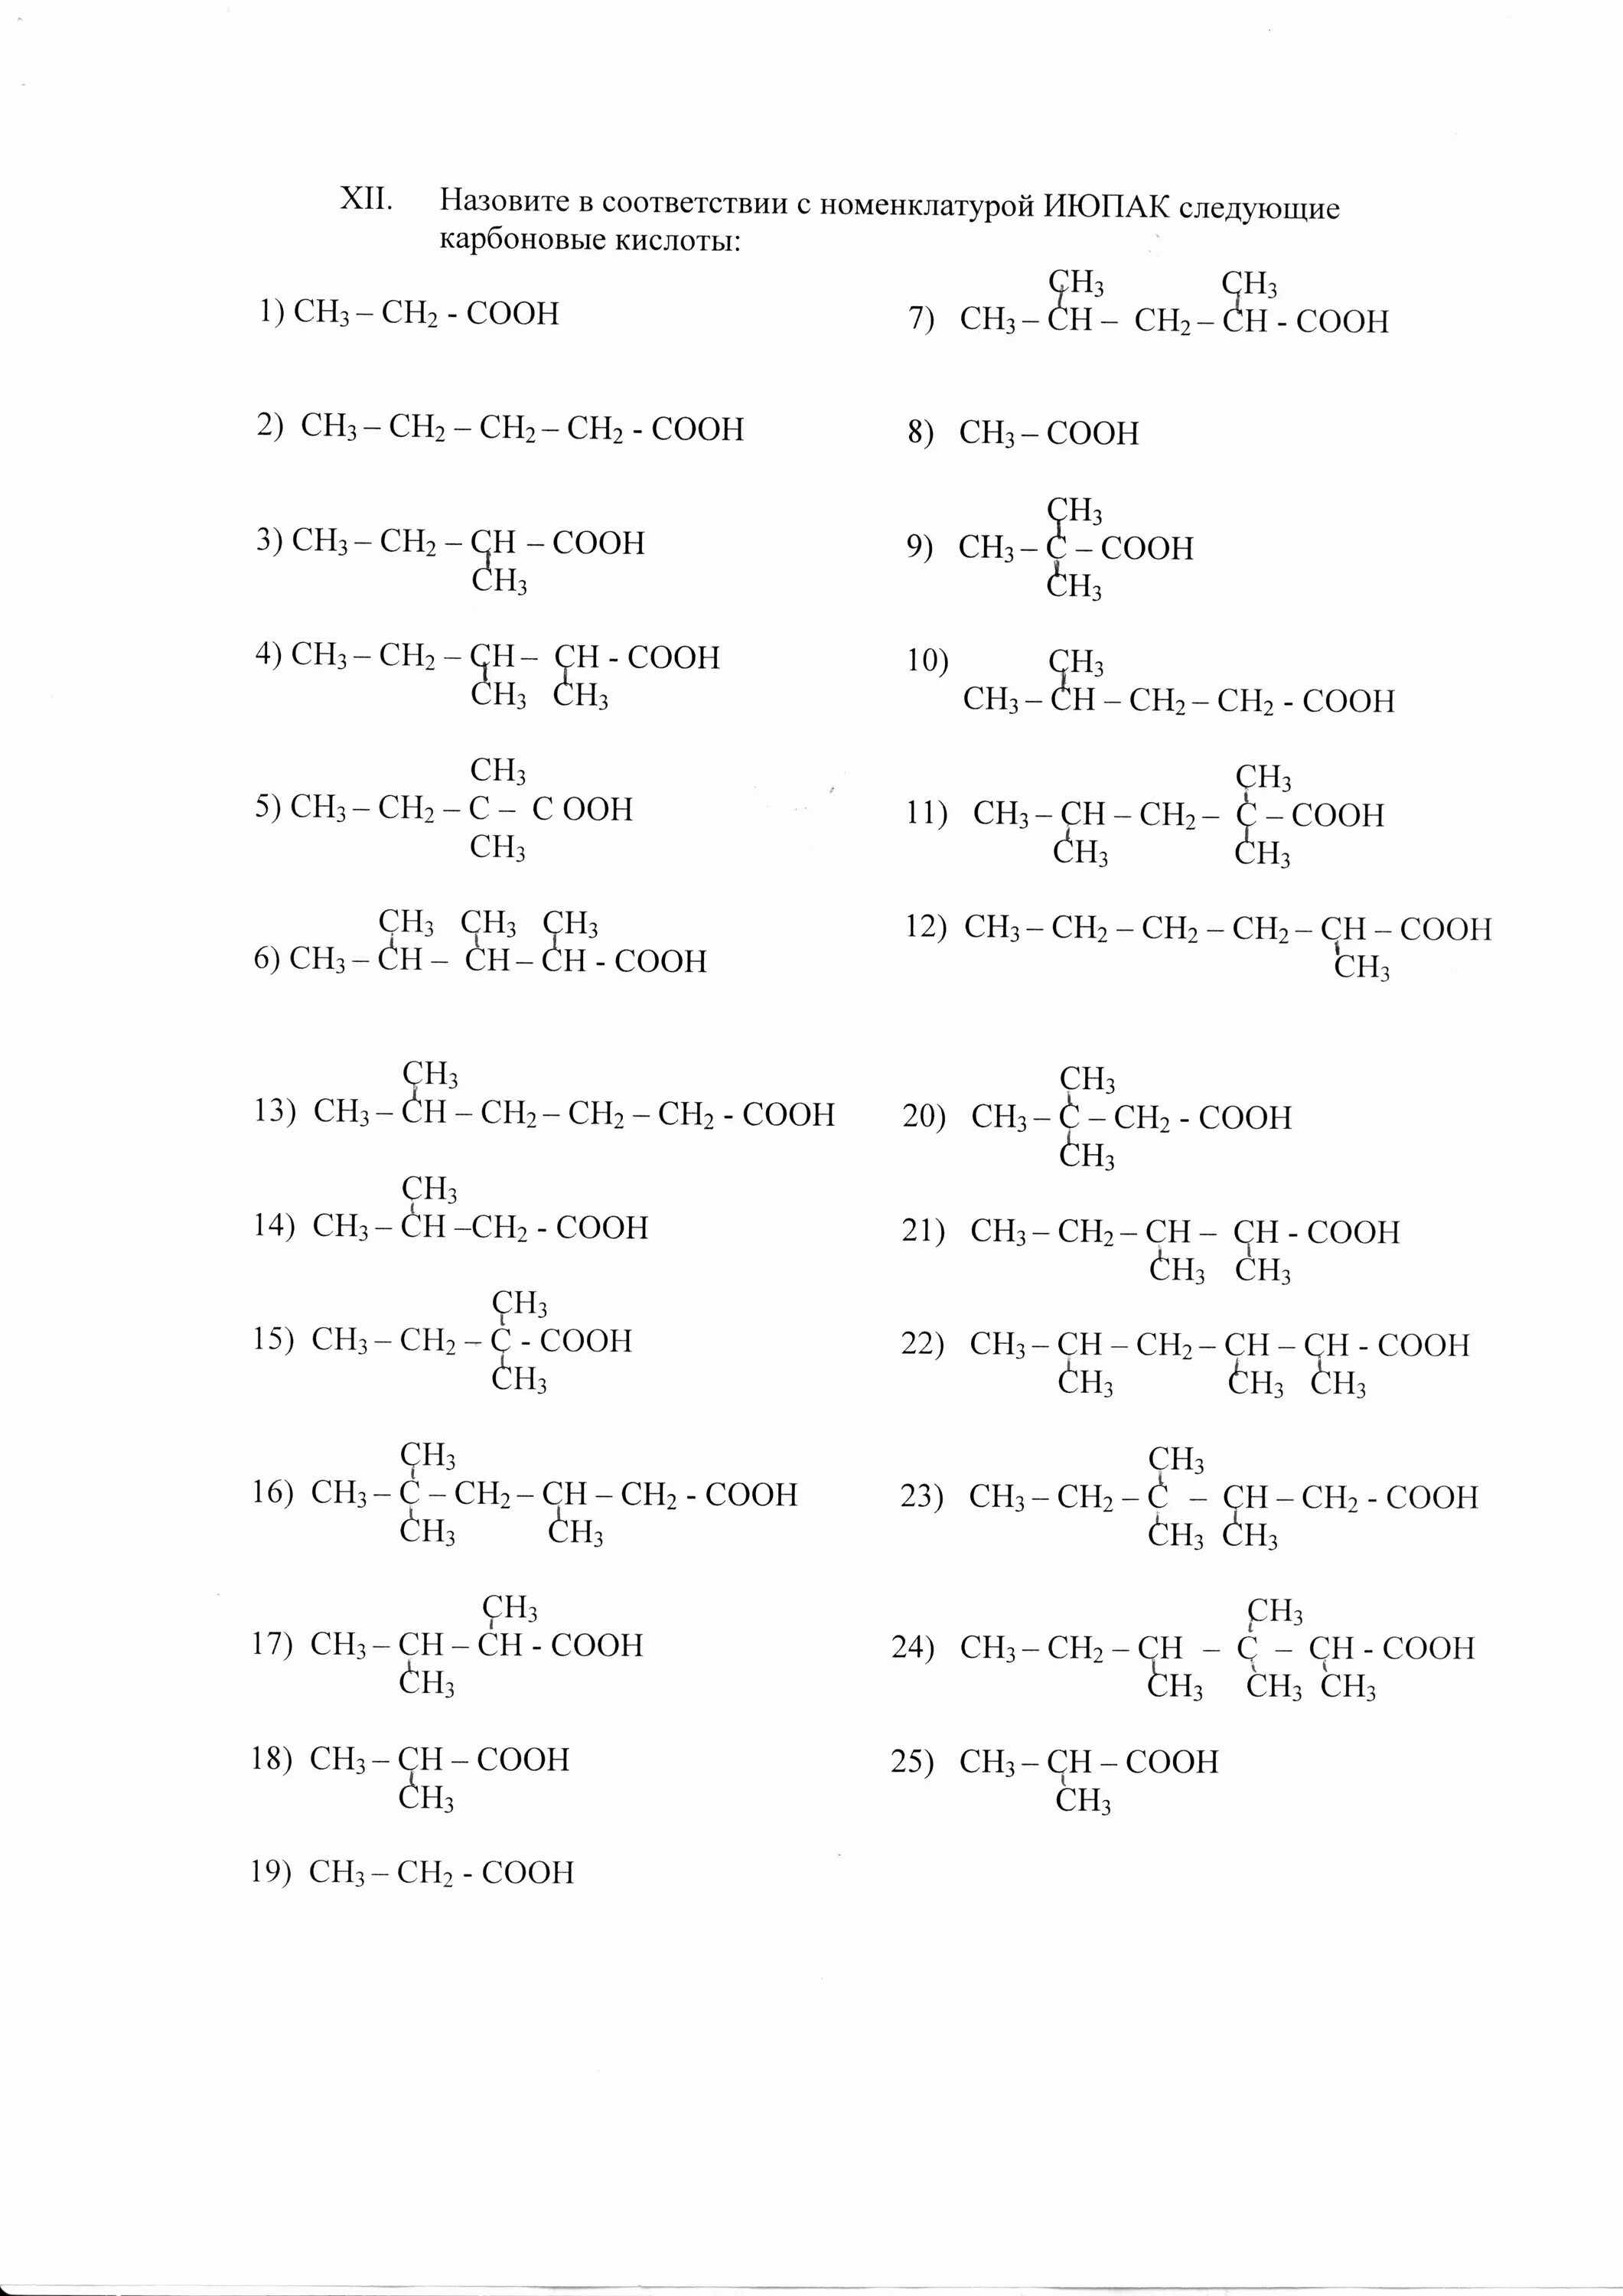 2 3 4 Триметилгексановая кислота. 2 3 3 Триметилпентановая кислота структурная формула. 2 4 4 Триметилгексановая кислота. 2 4 4 Триметилгексановая структурная формула. 2 2 диметилпропановая кислота структурная формула